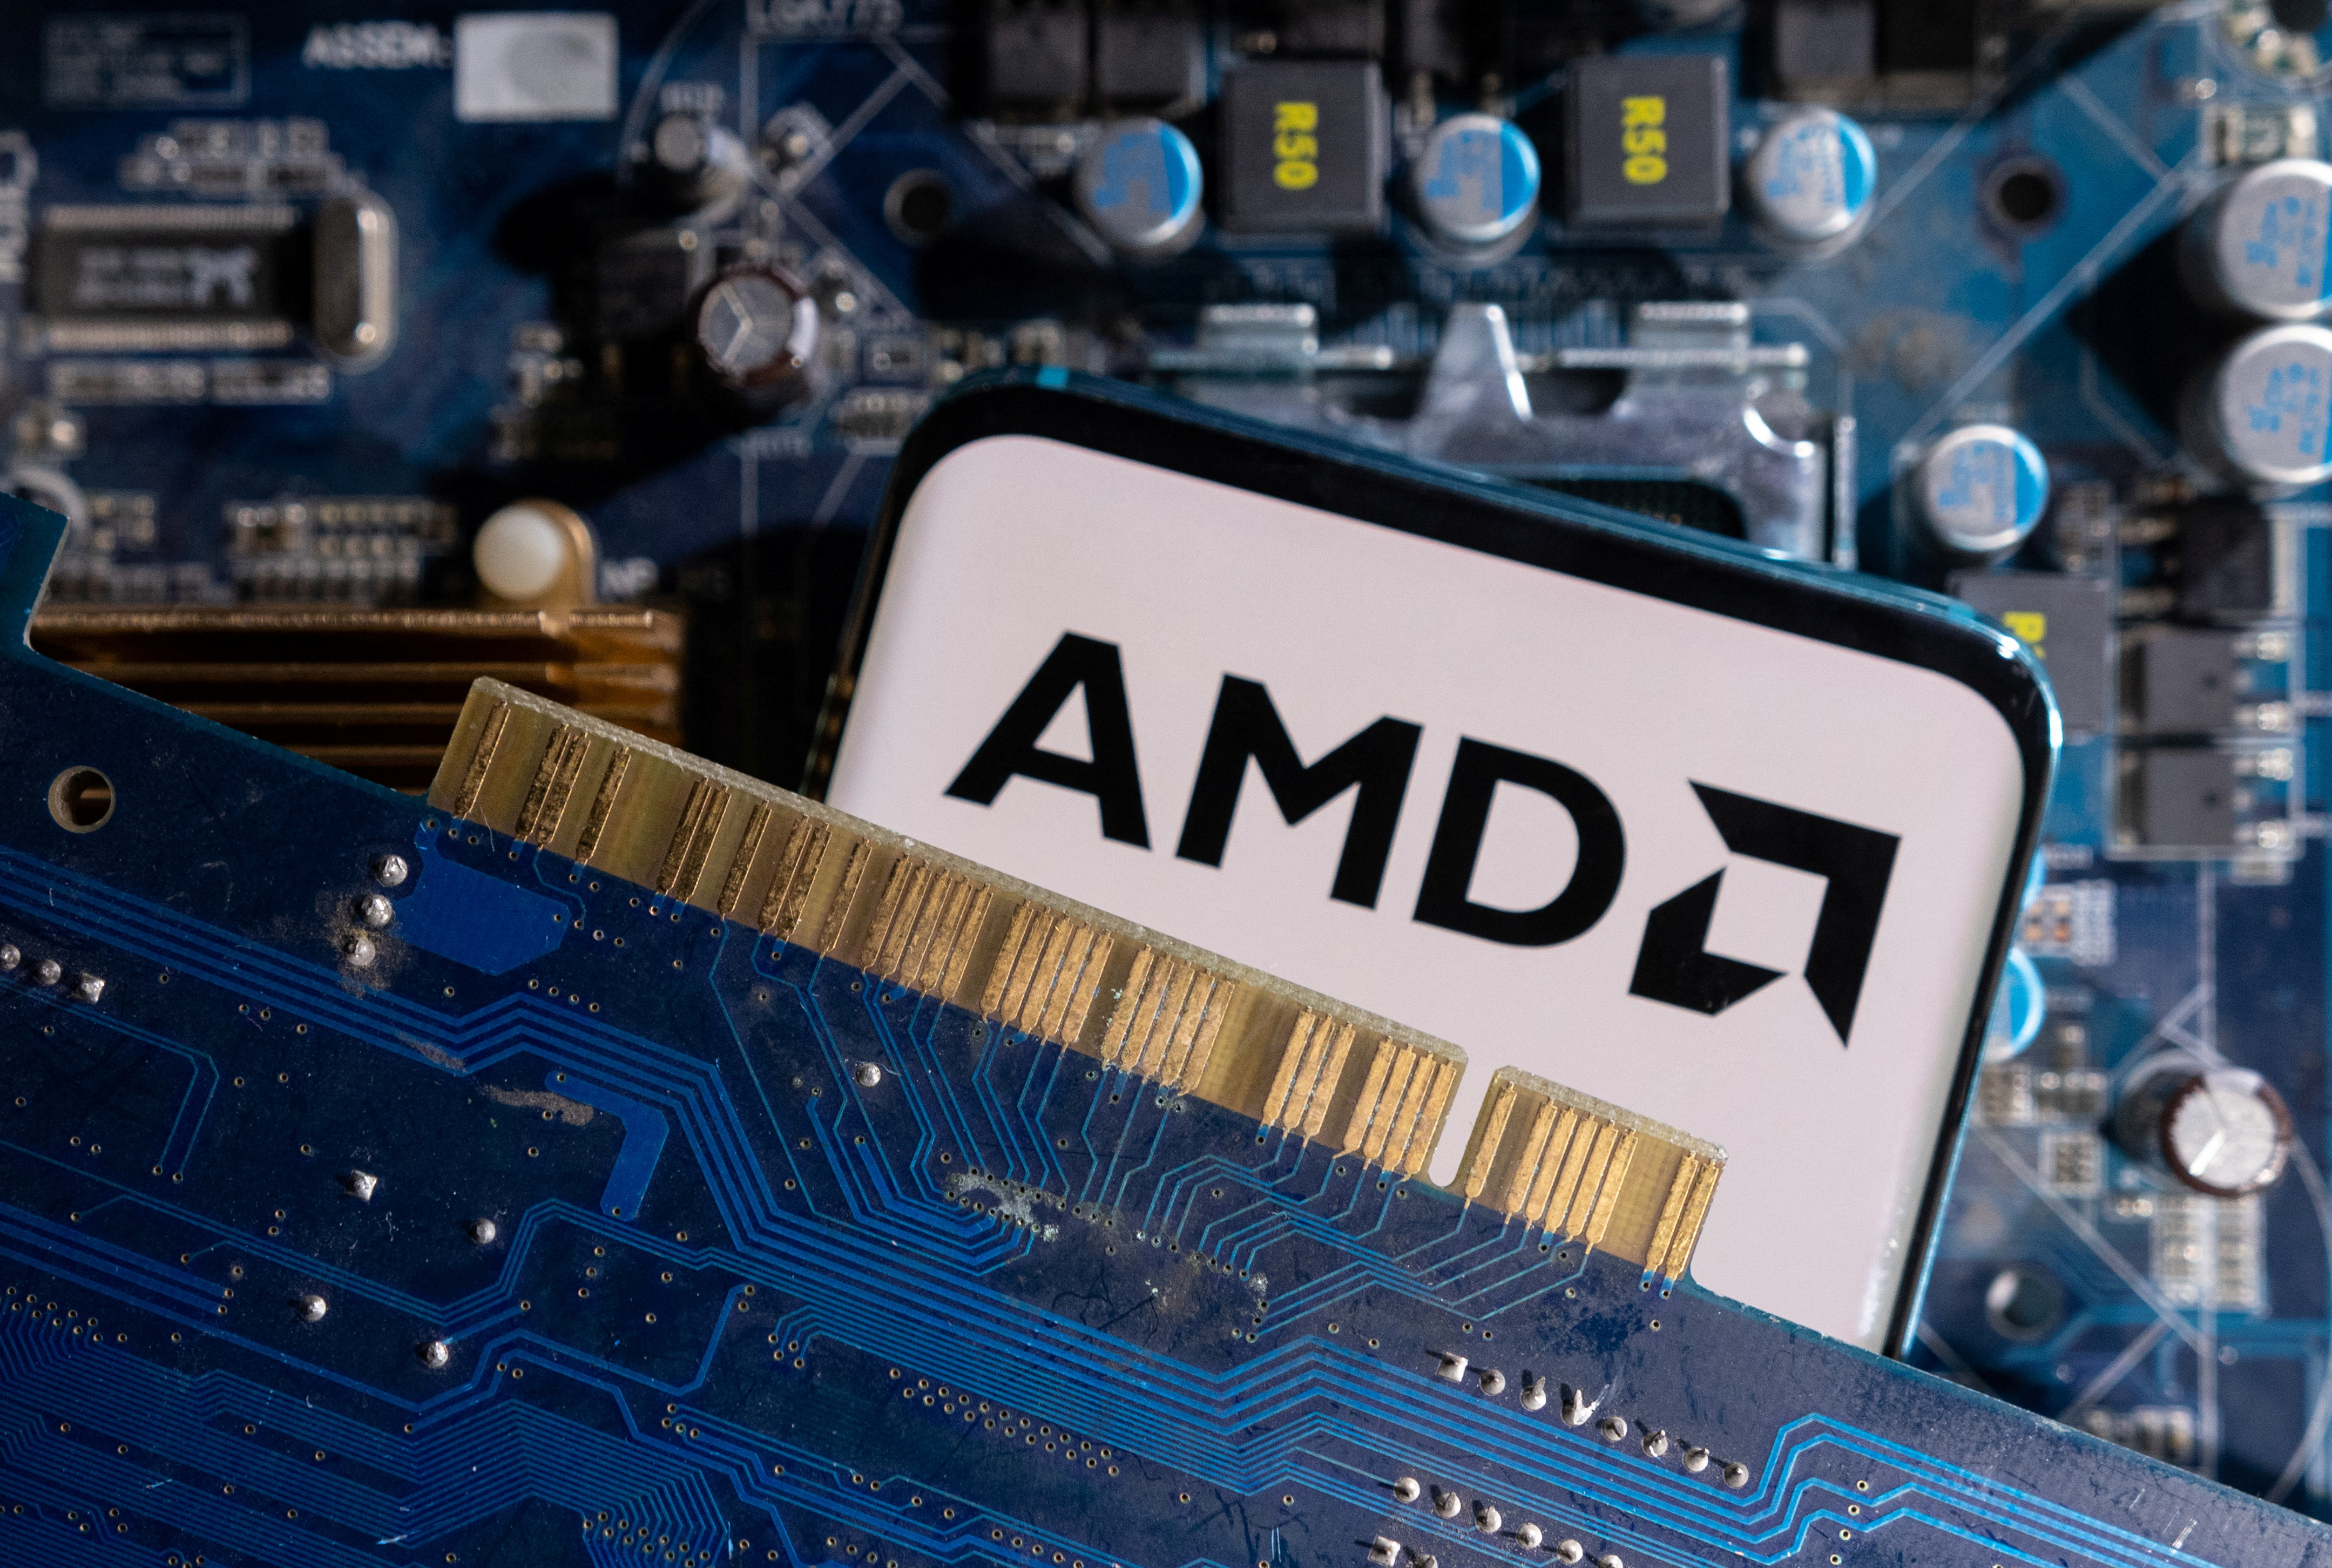 Illustration shows AMD logo